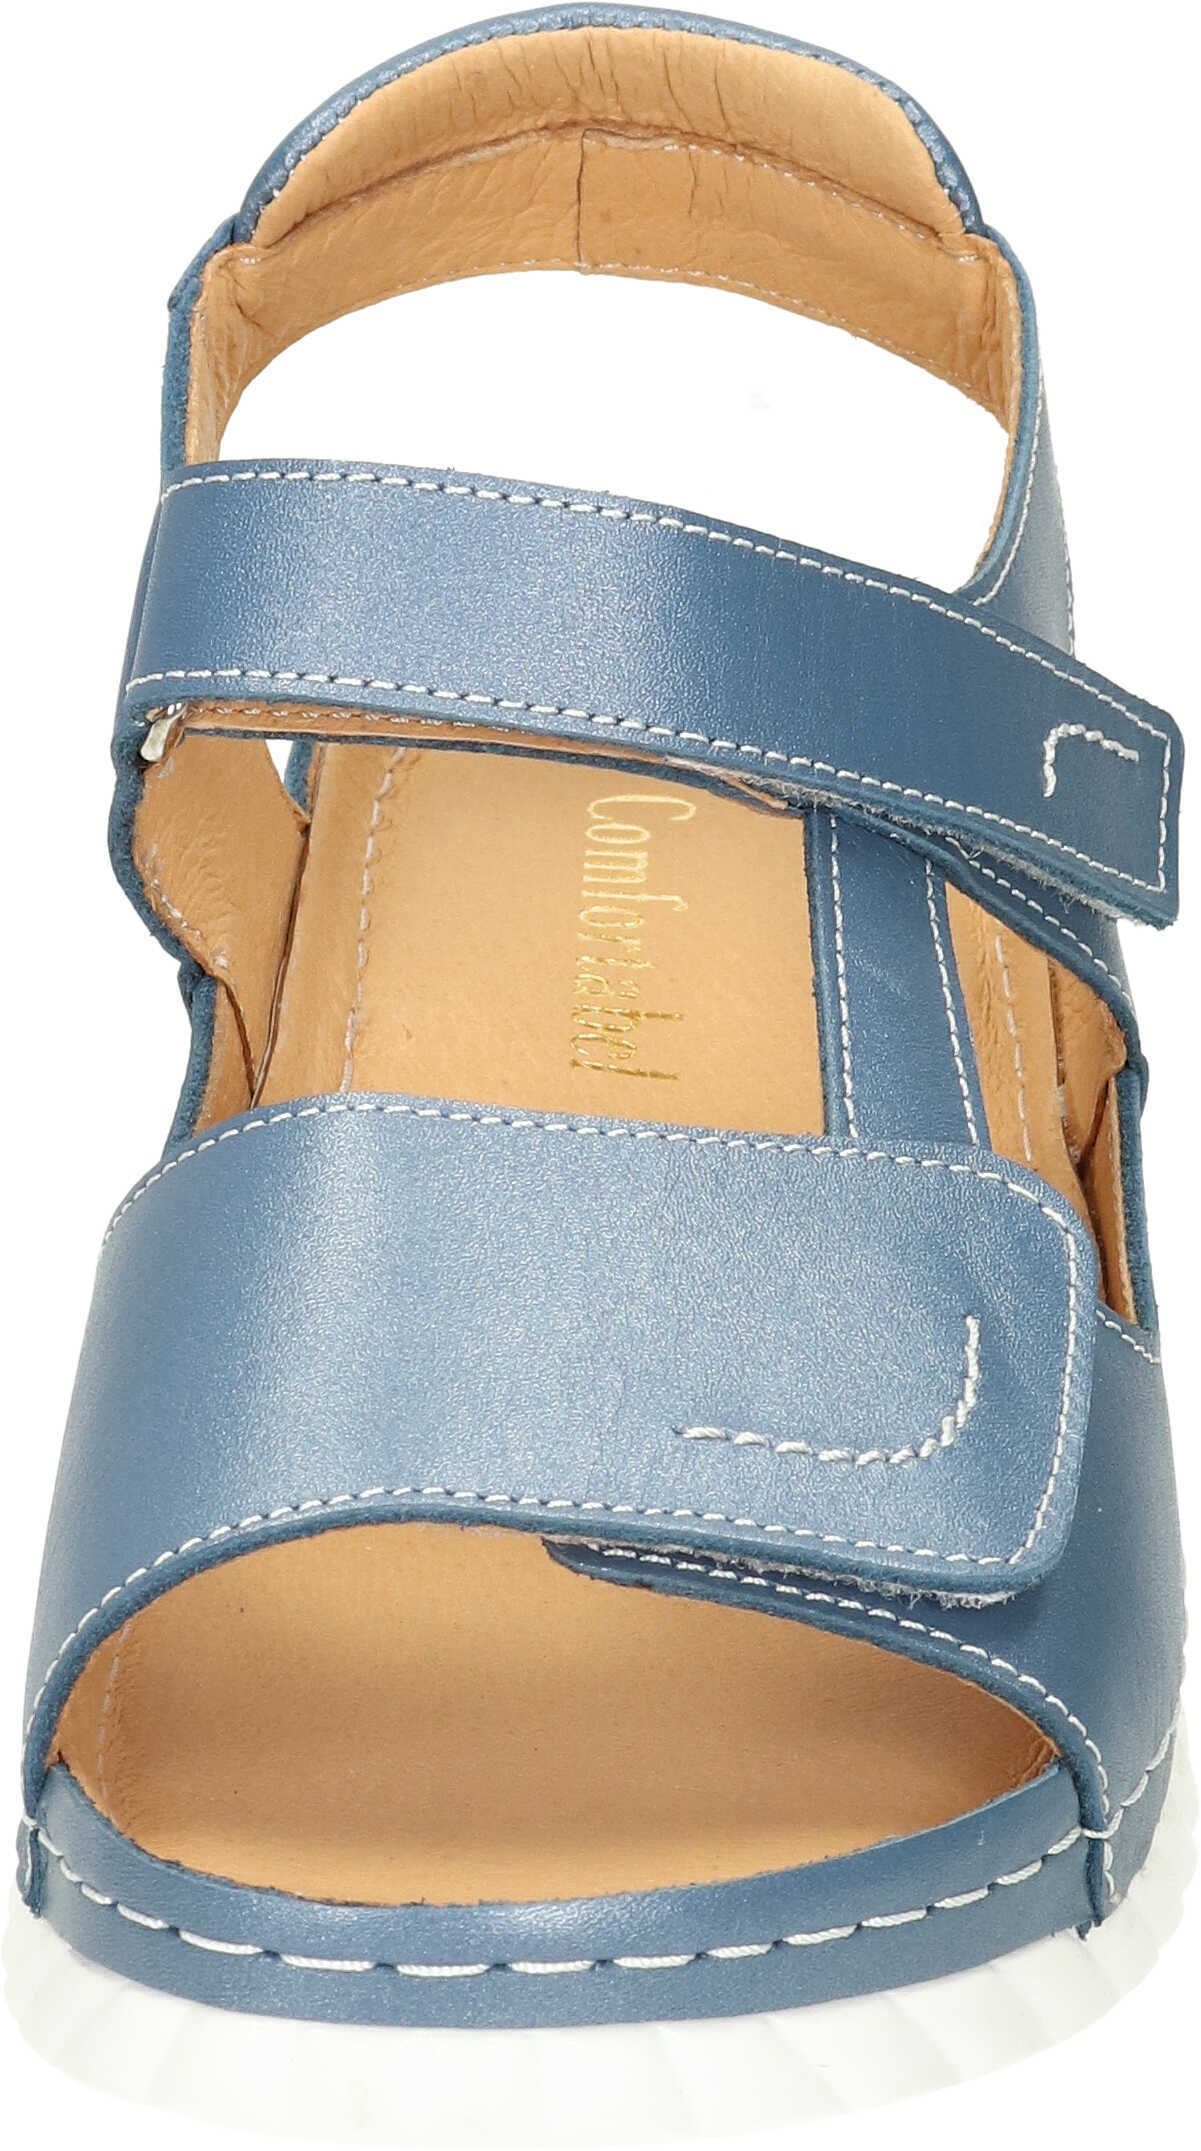 Sandaletten Leder echtem aus Sandalette blau Comfortabel